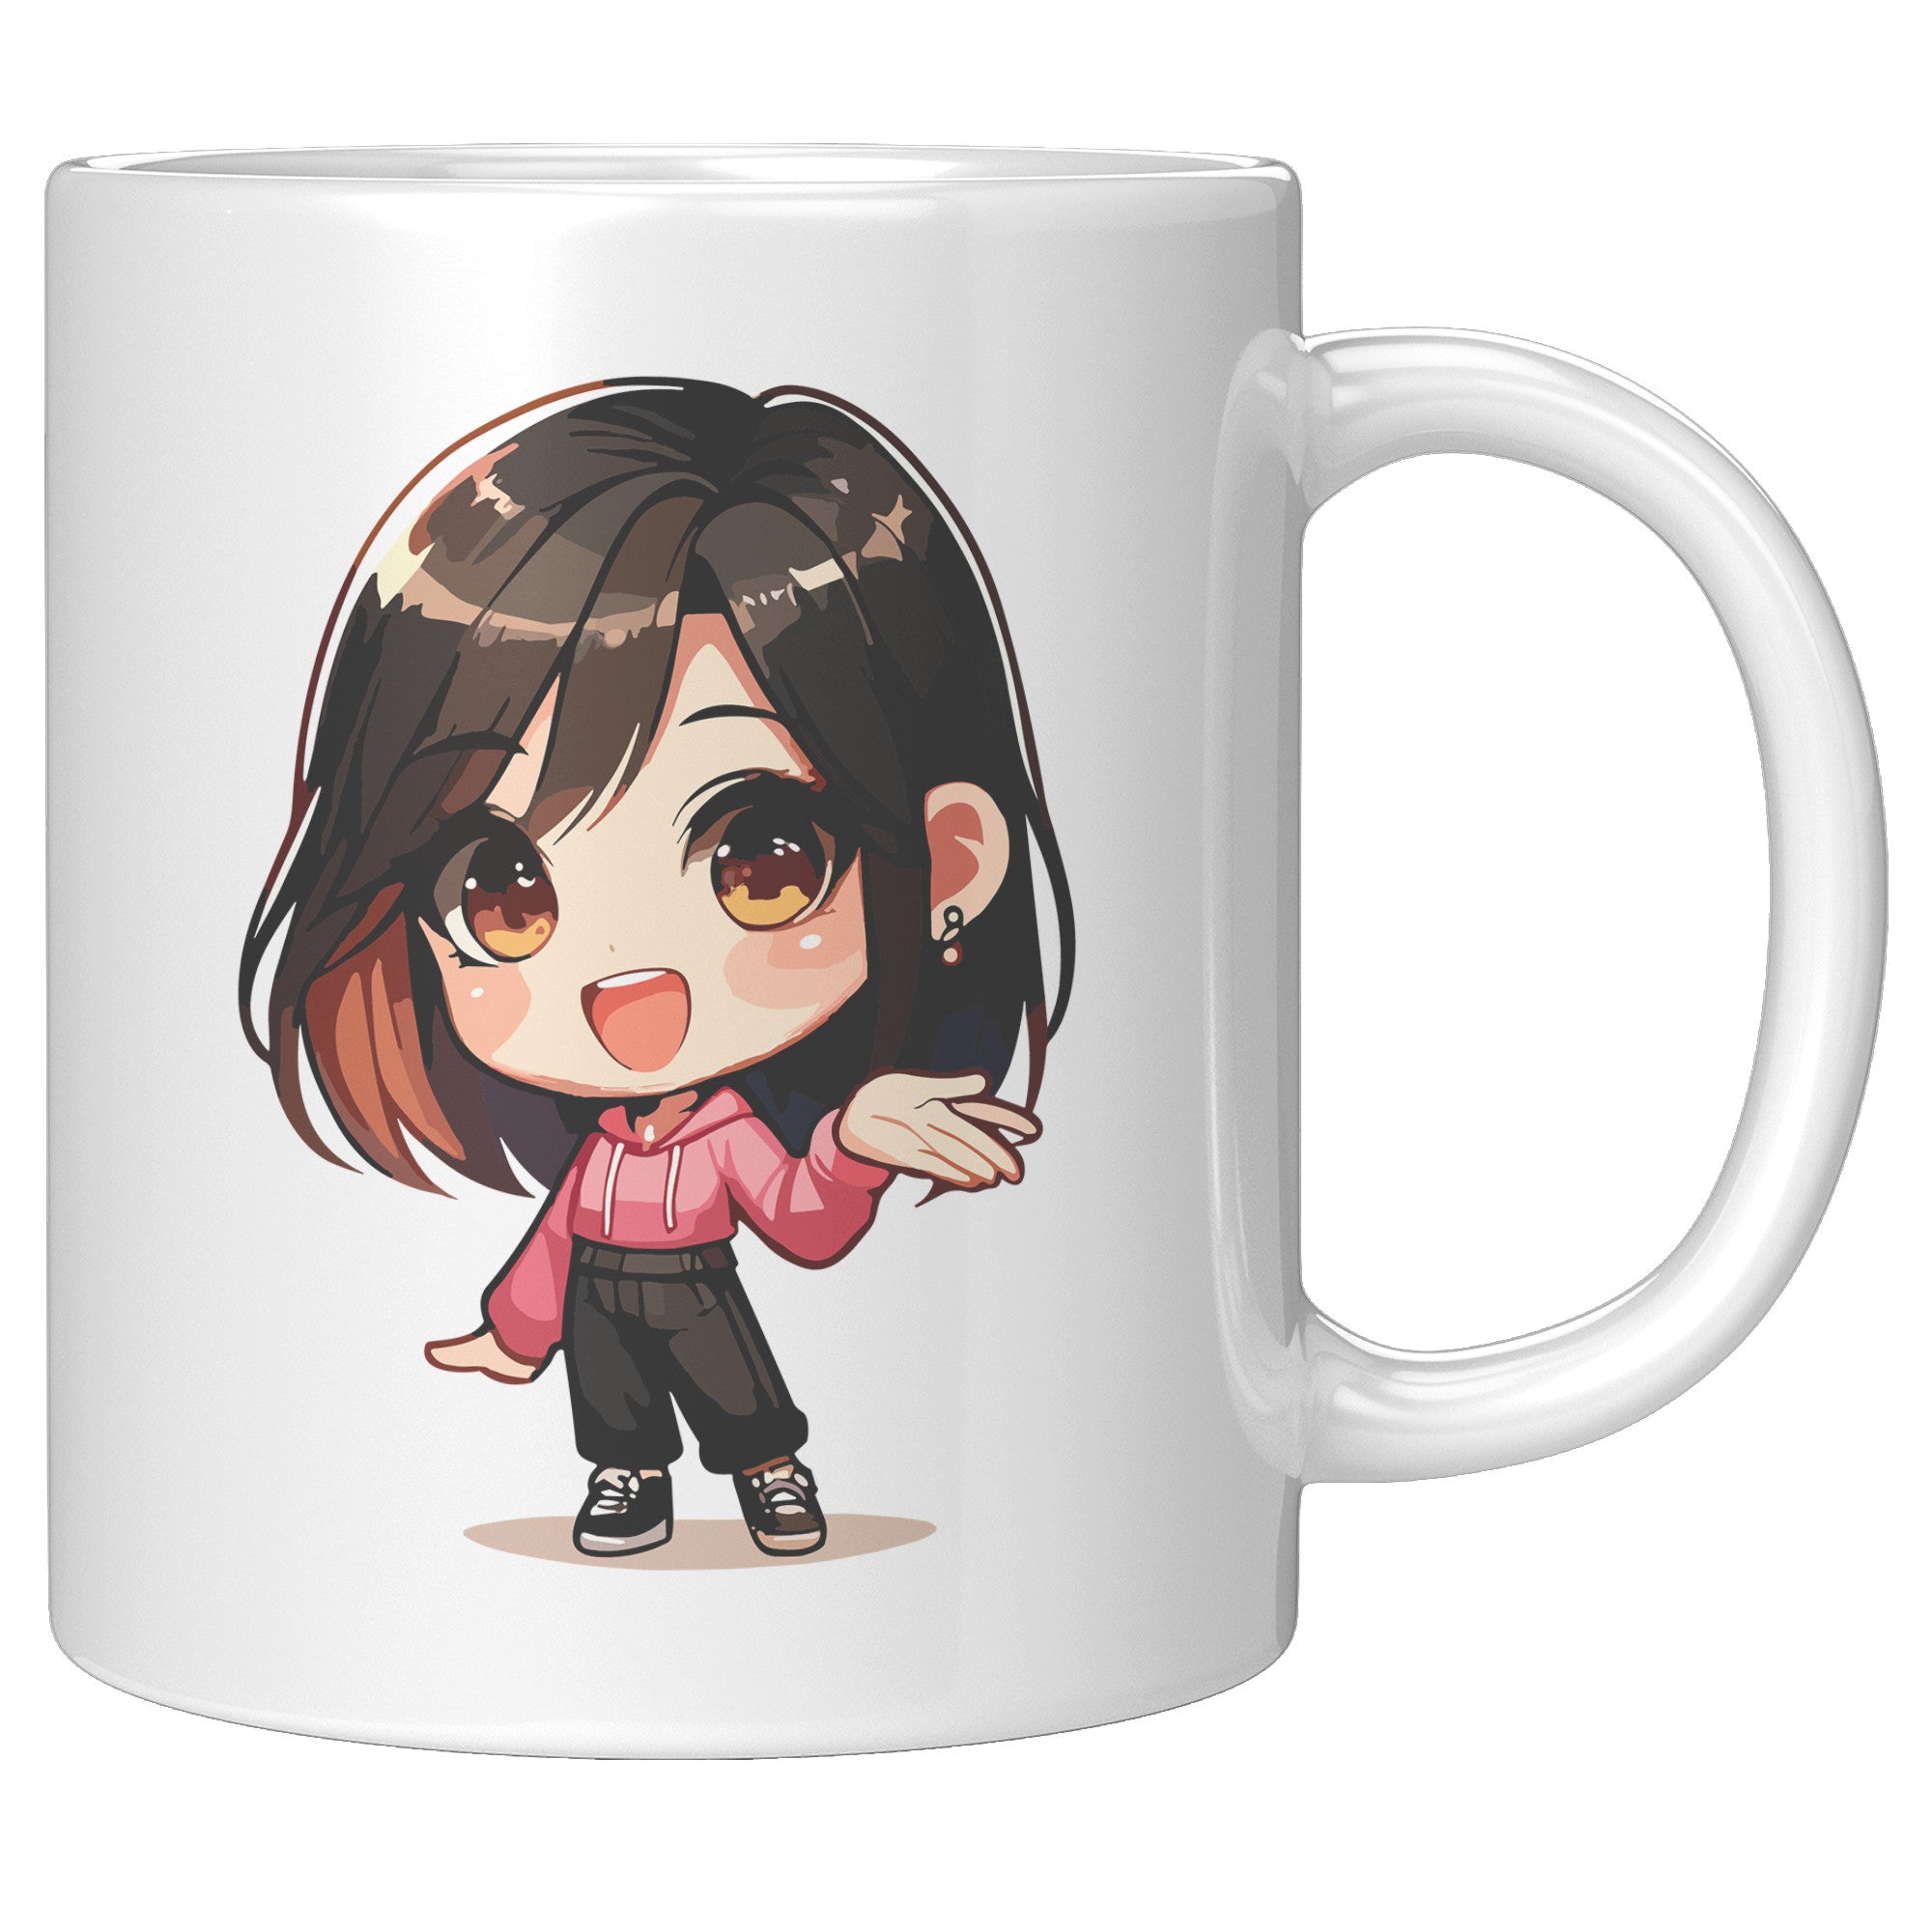 "Marites Gossip Queen Coffee Mug - Cute Cartoon 'Ano Ang Latest?' Cup - Perfect Chismosa Gift - Filipino Slang Tea Mug" - II